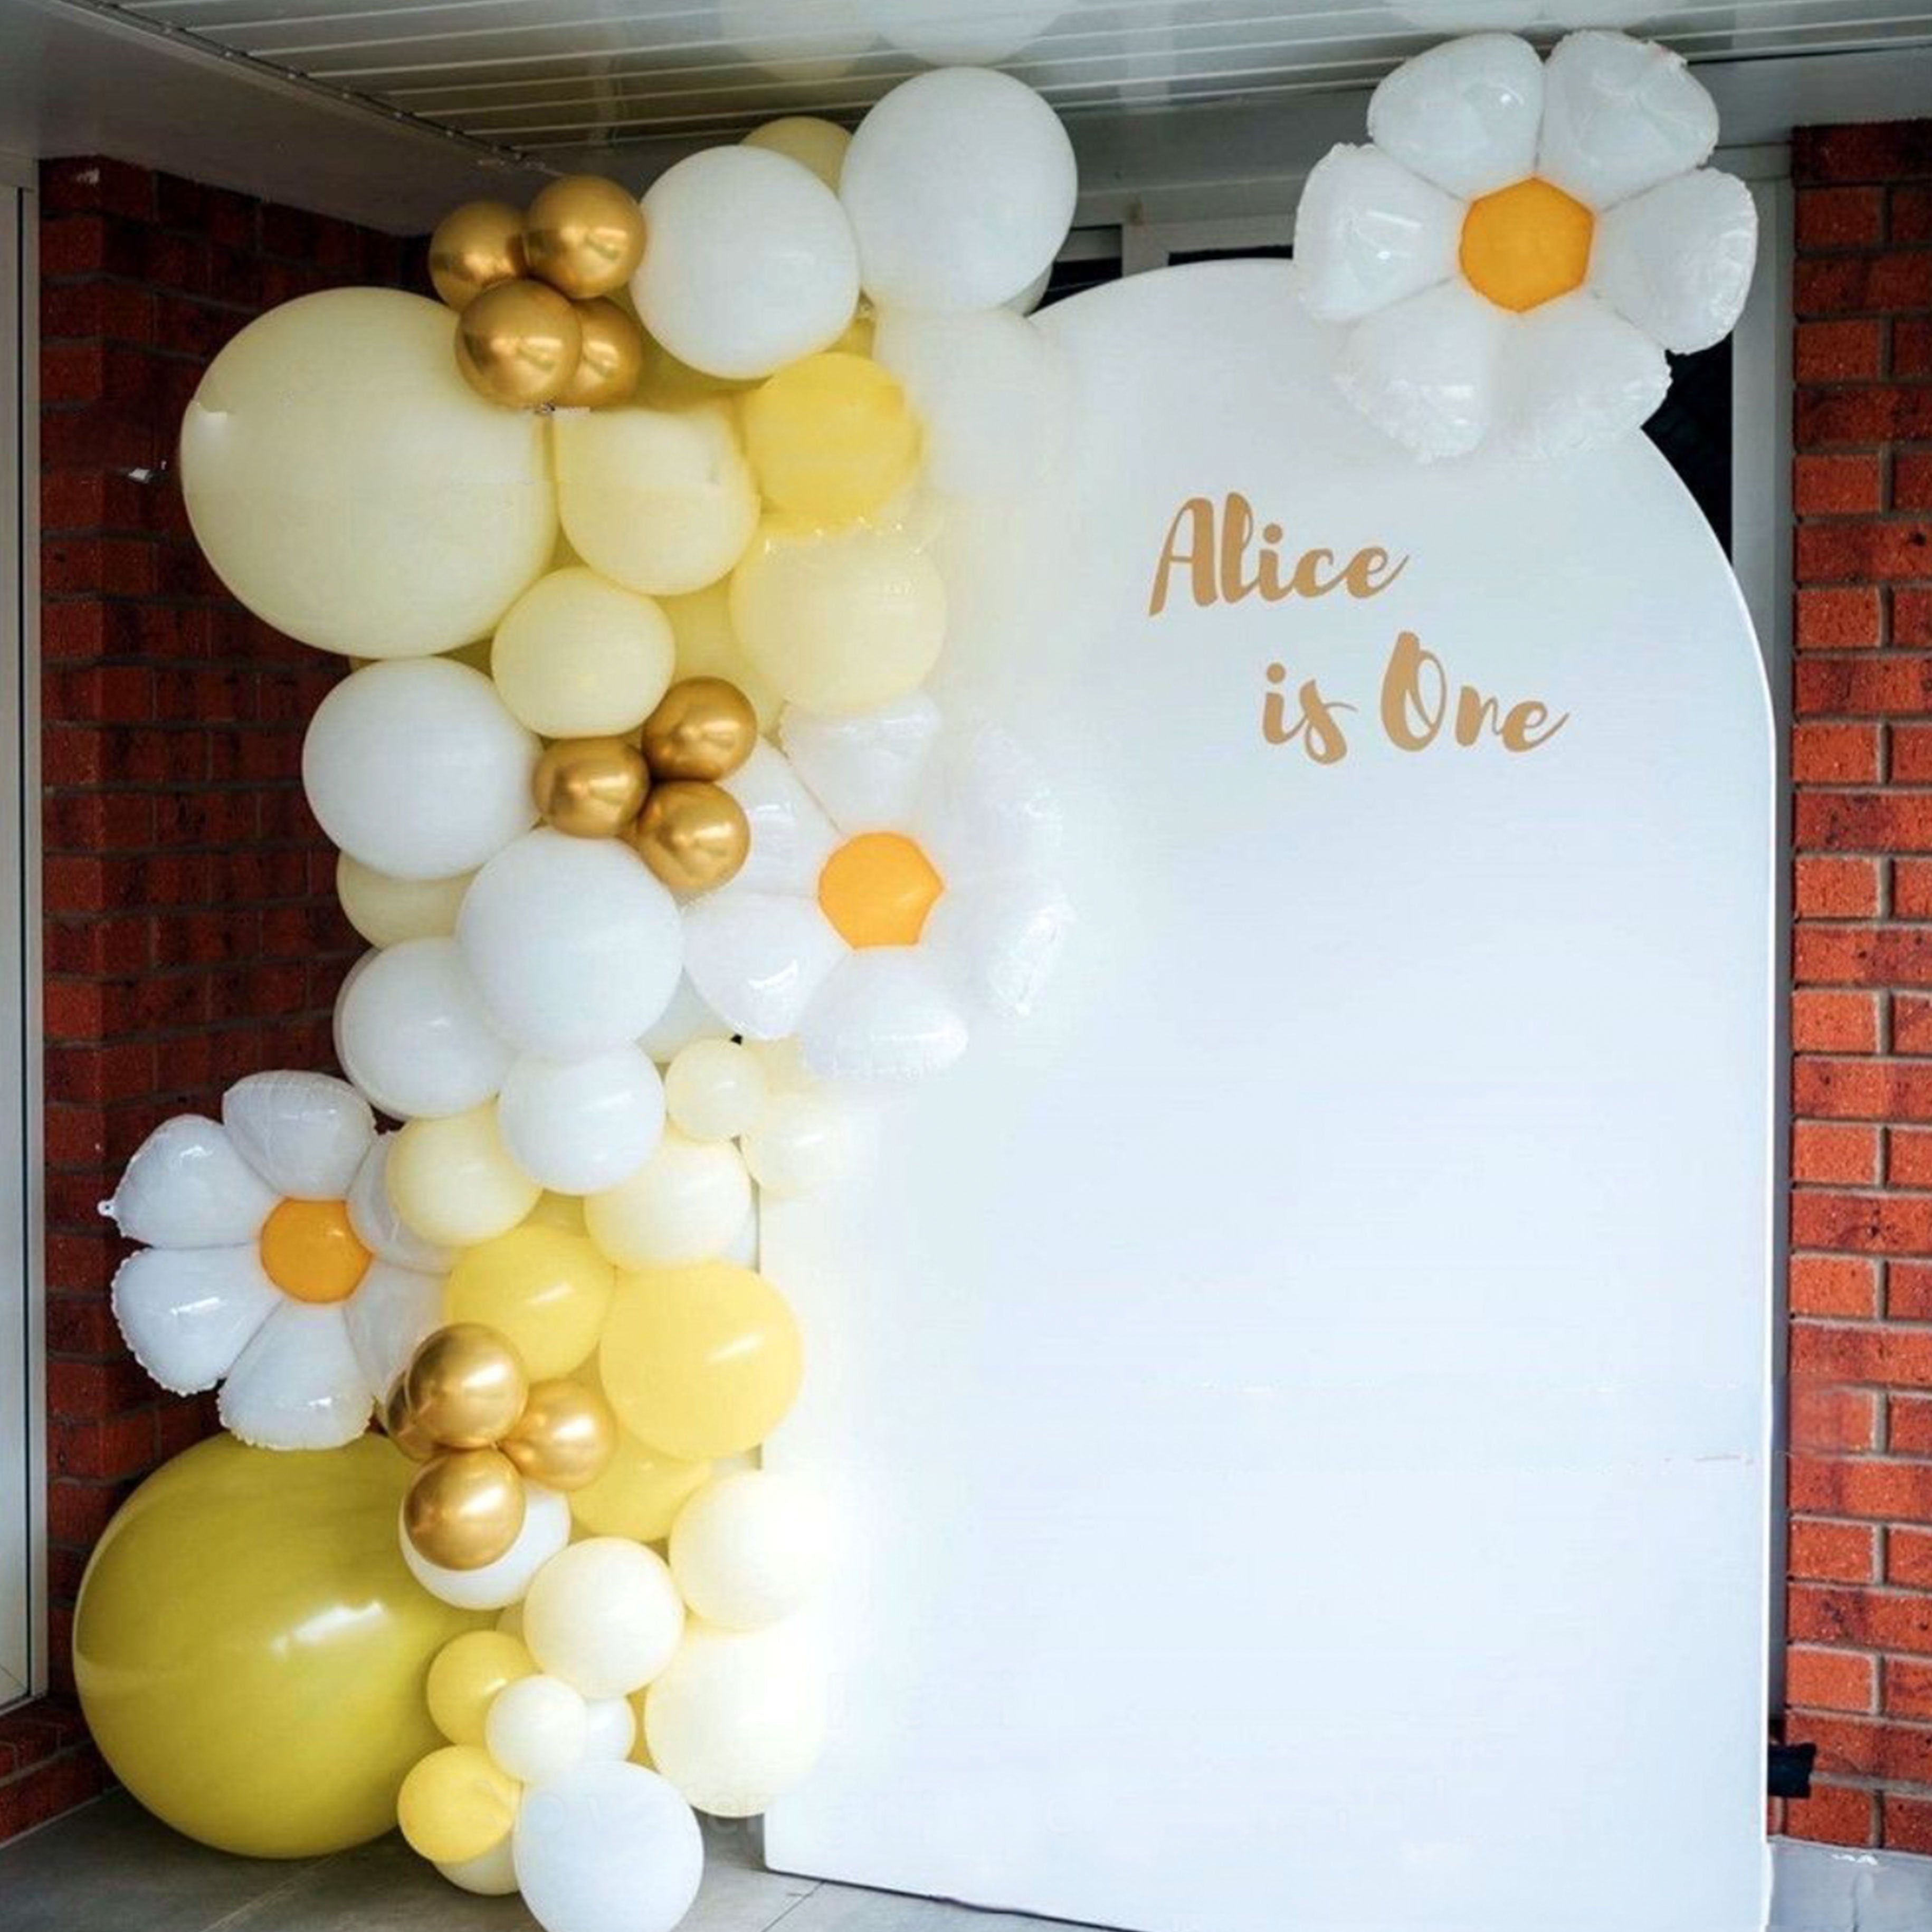 Vibrant Balloon Decorations for Events - Daisy Balloon Chain Set